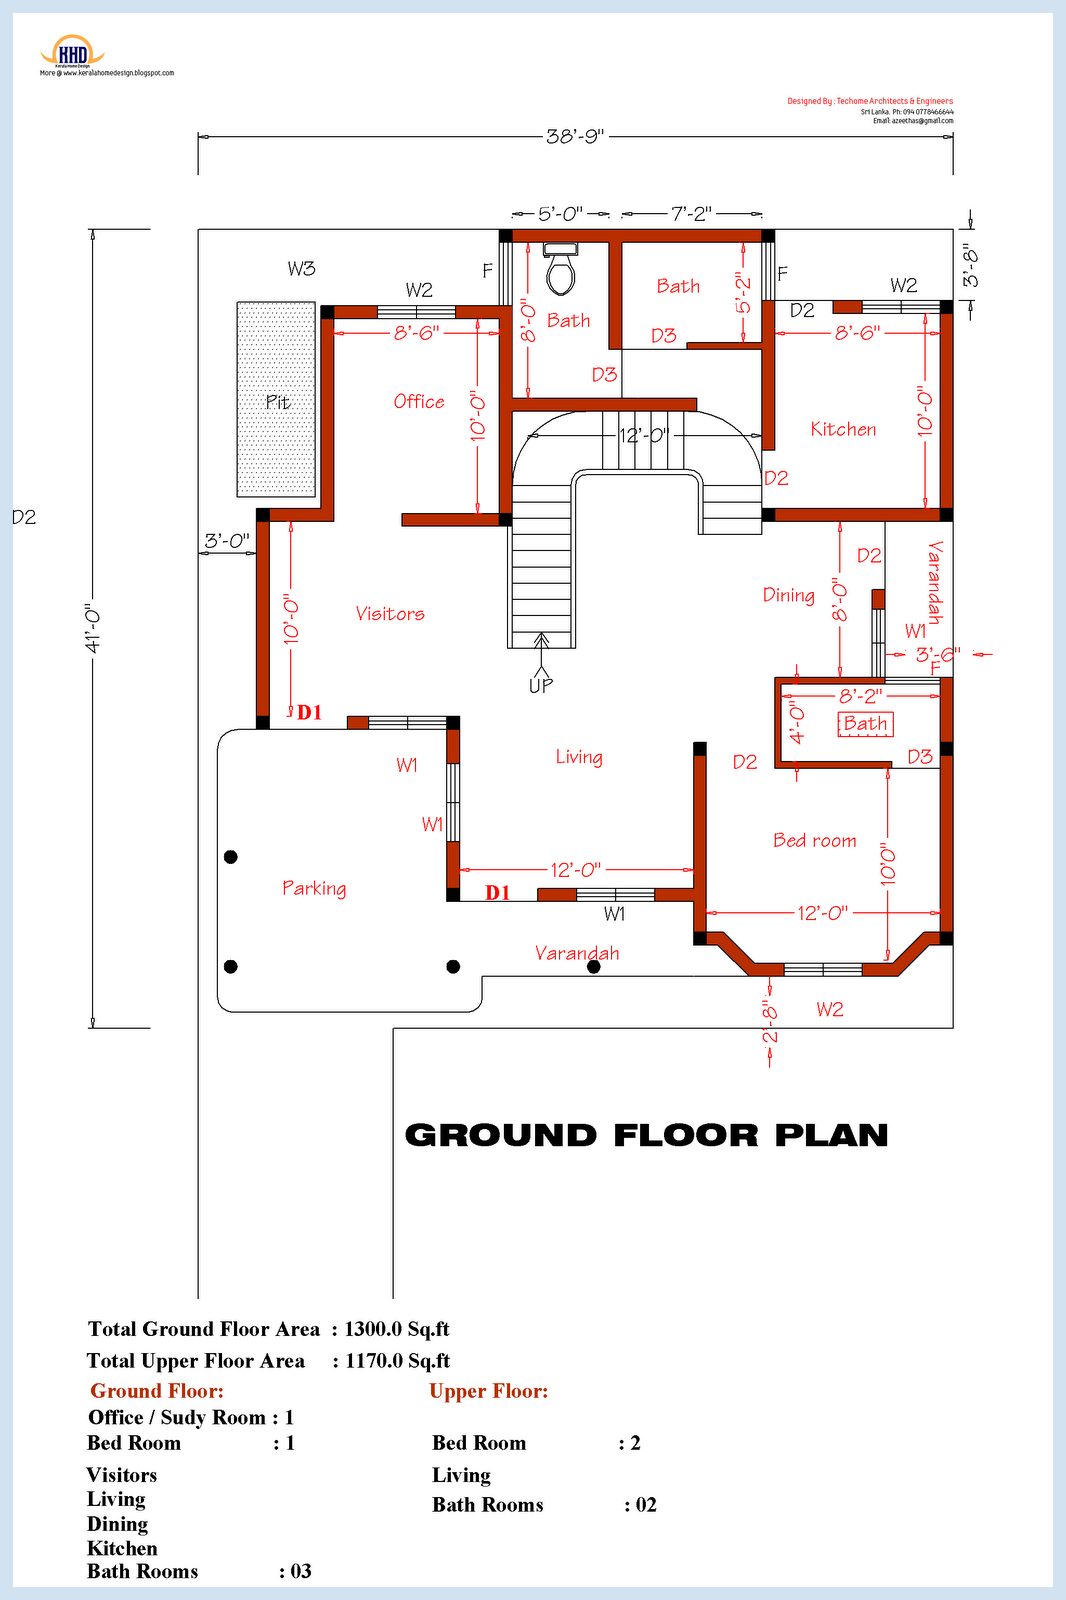  3  Bedroom  home  plan  and elevation Kerala House  Design Idea